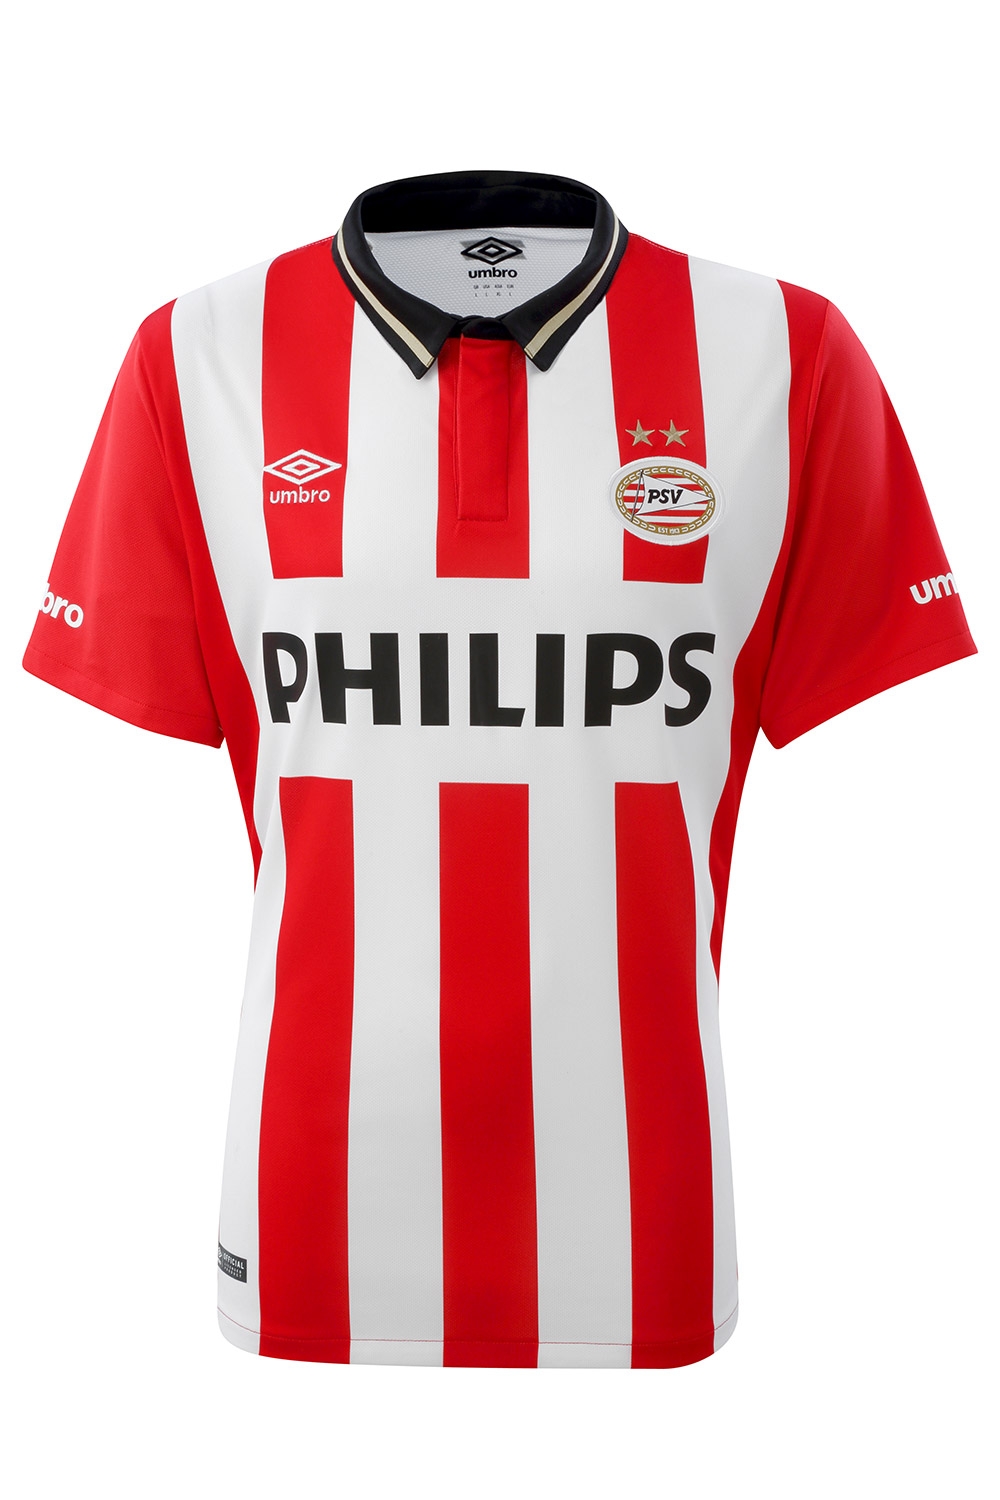 PSV thuisshirt 2016 - PSV shirt 15/16 kopen